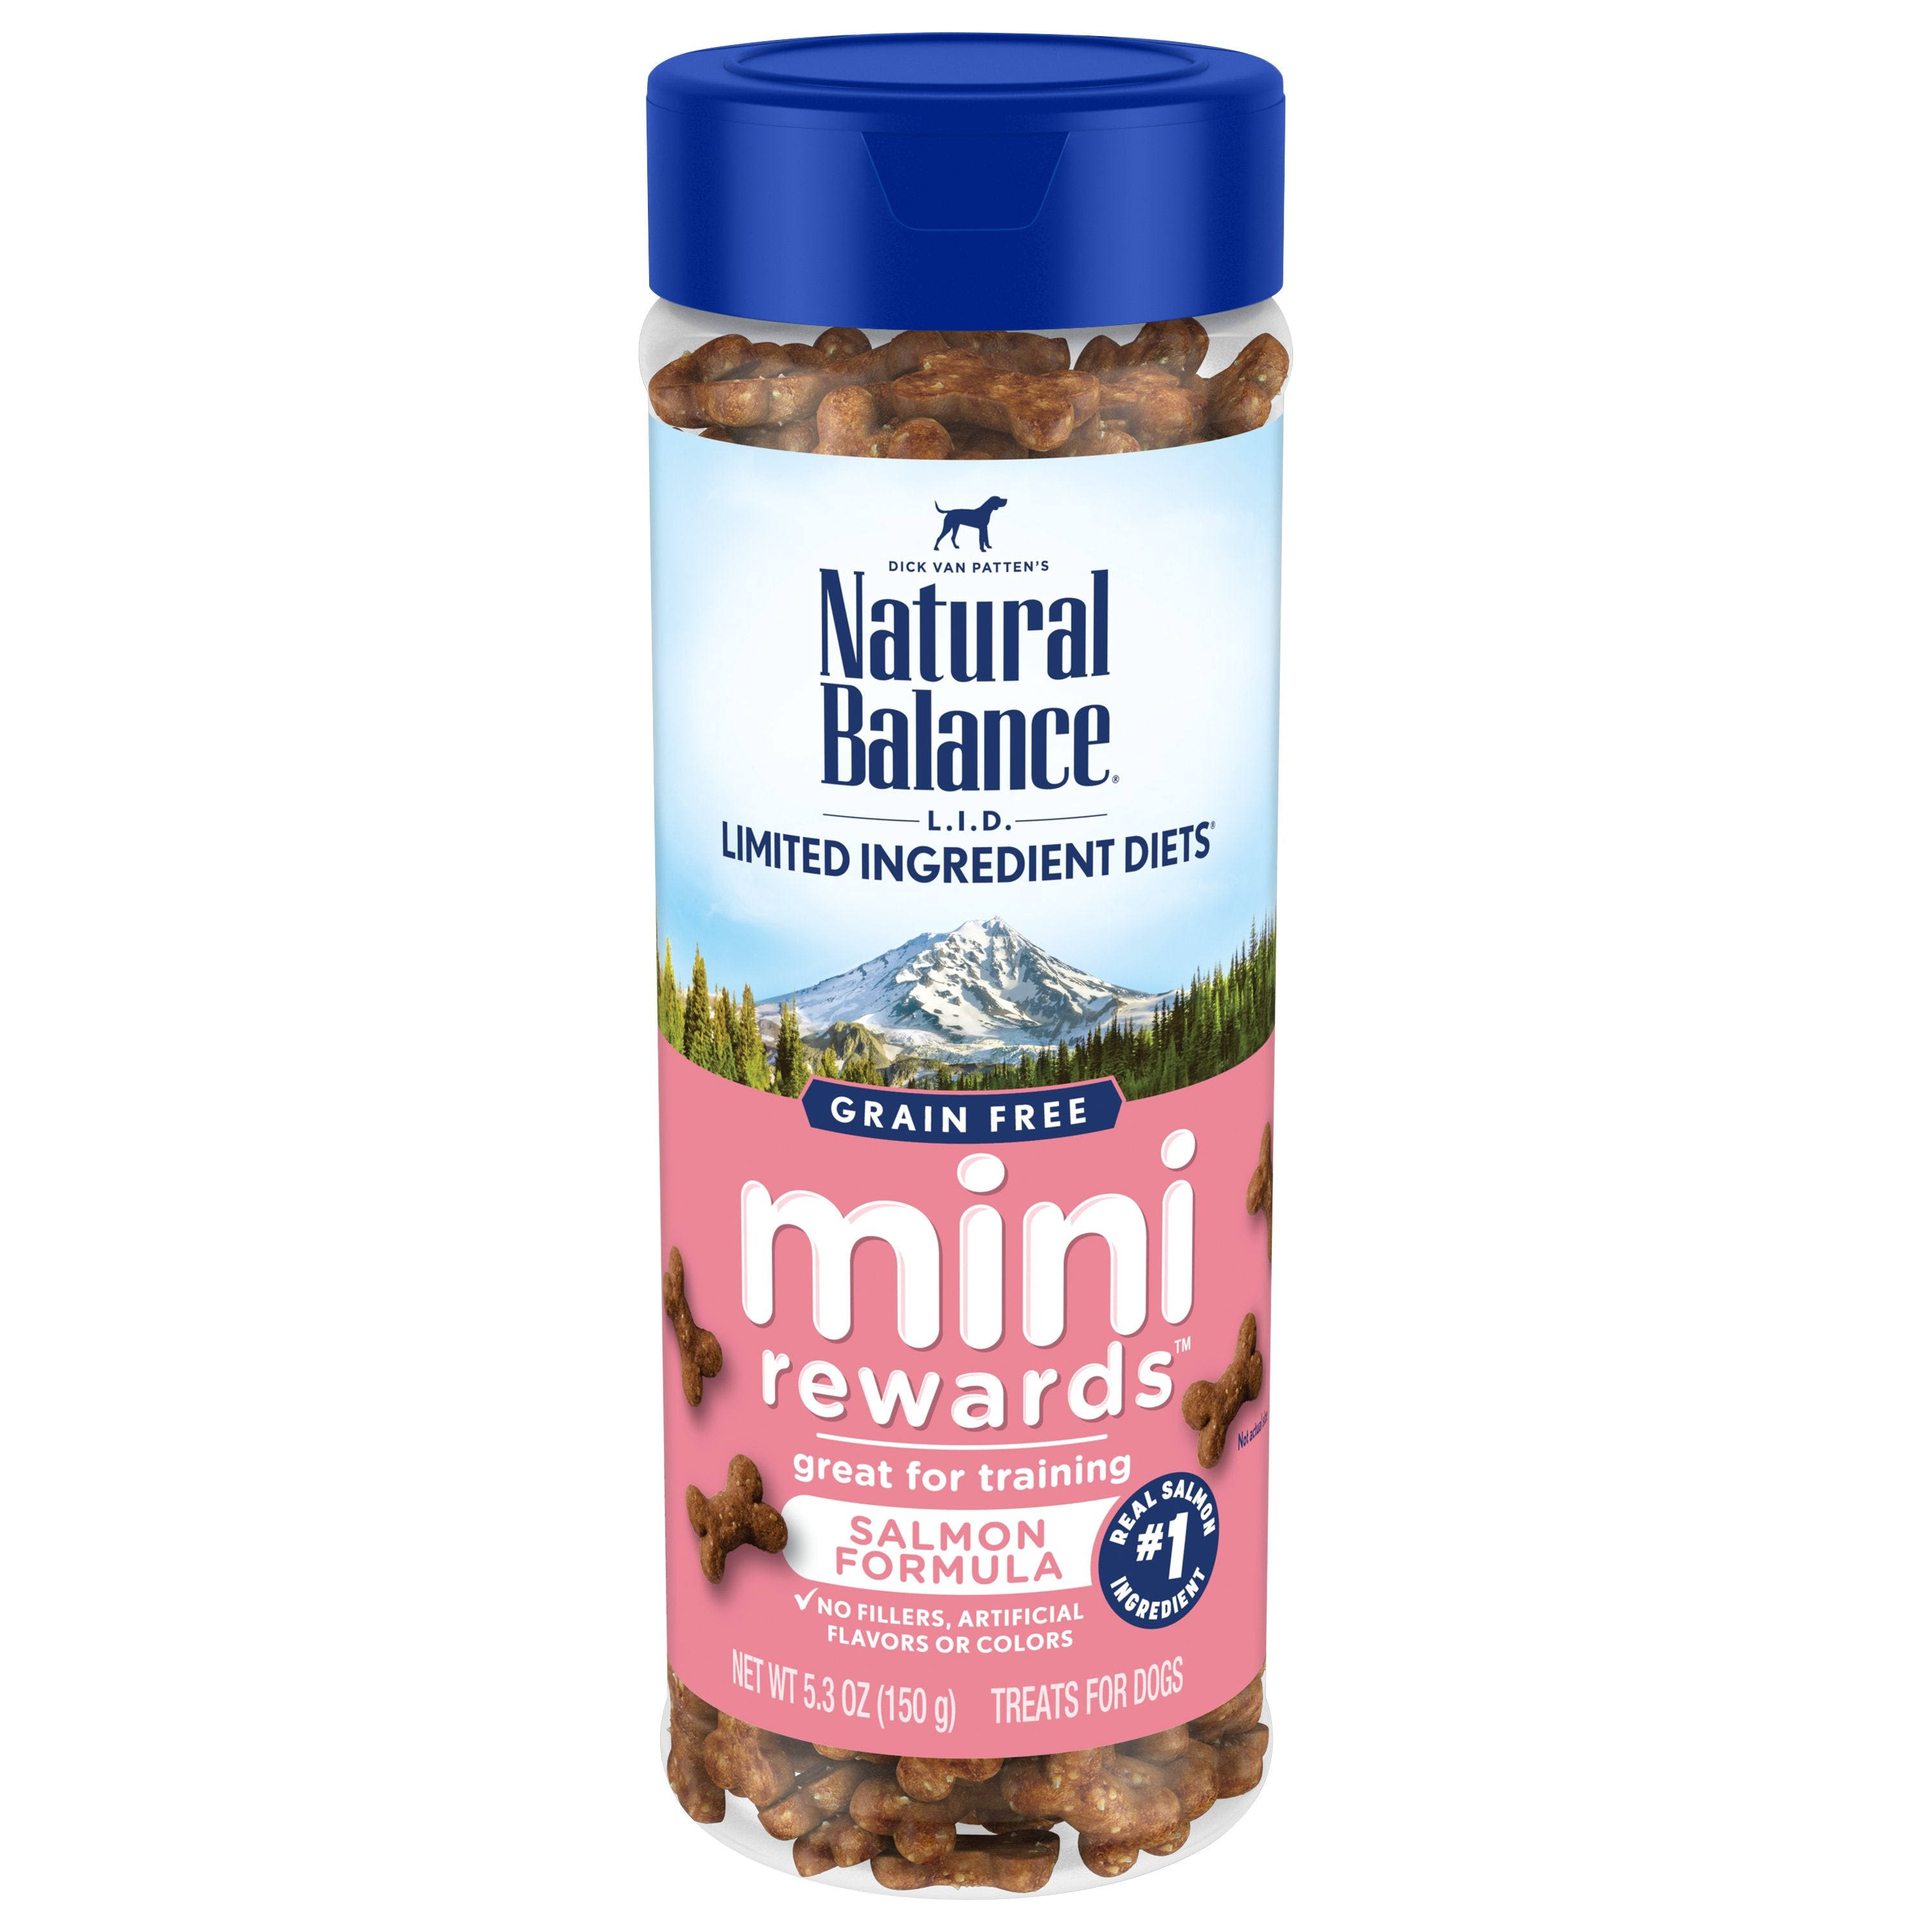 Natural Balance Limited Ingredient Diets Mini Rewards Salmon Formula Dog Treats